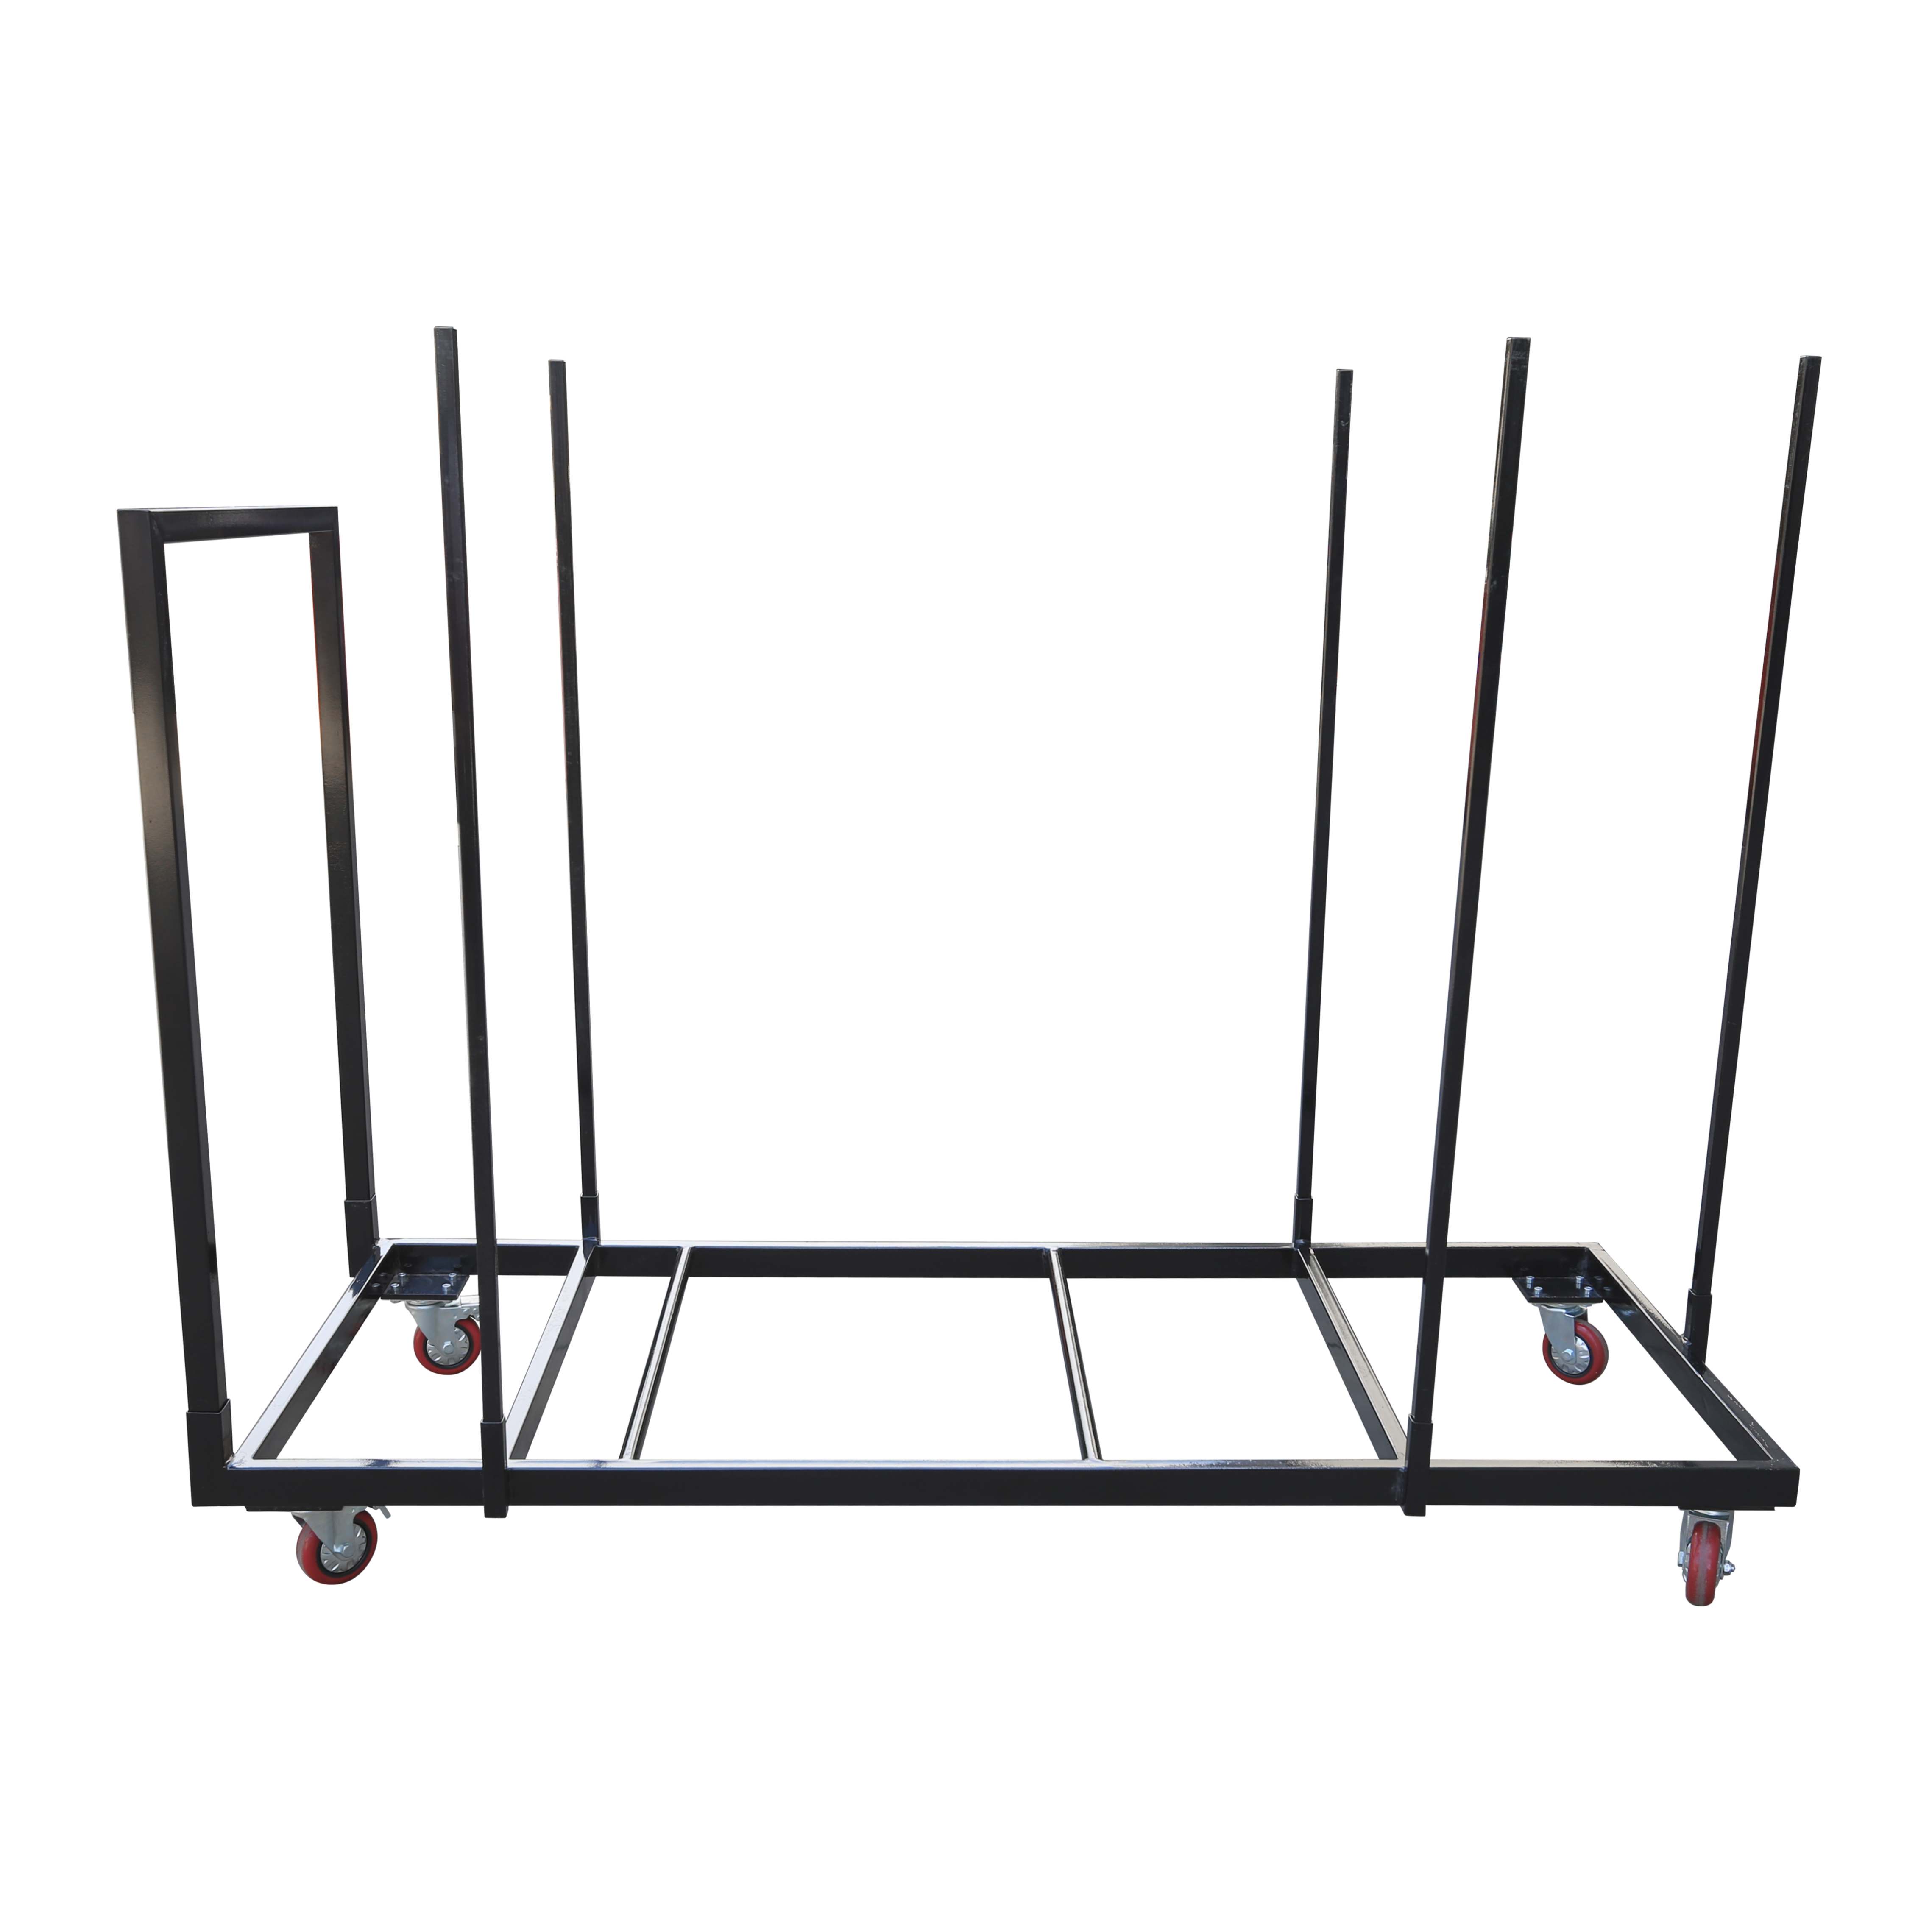 Table cart/ 20 rectangular 152-183cm